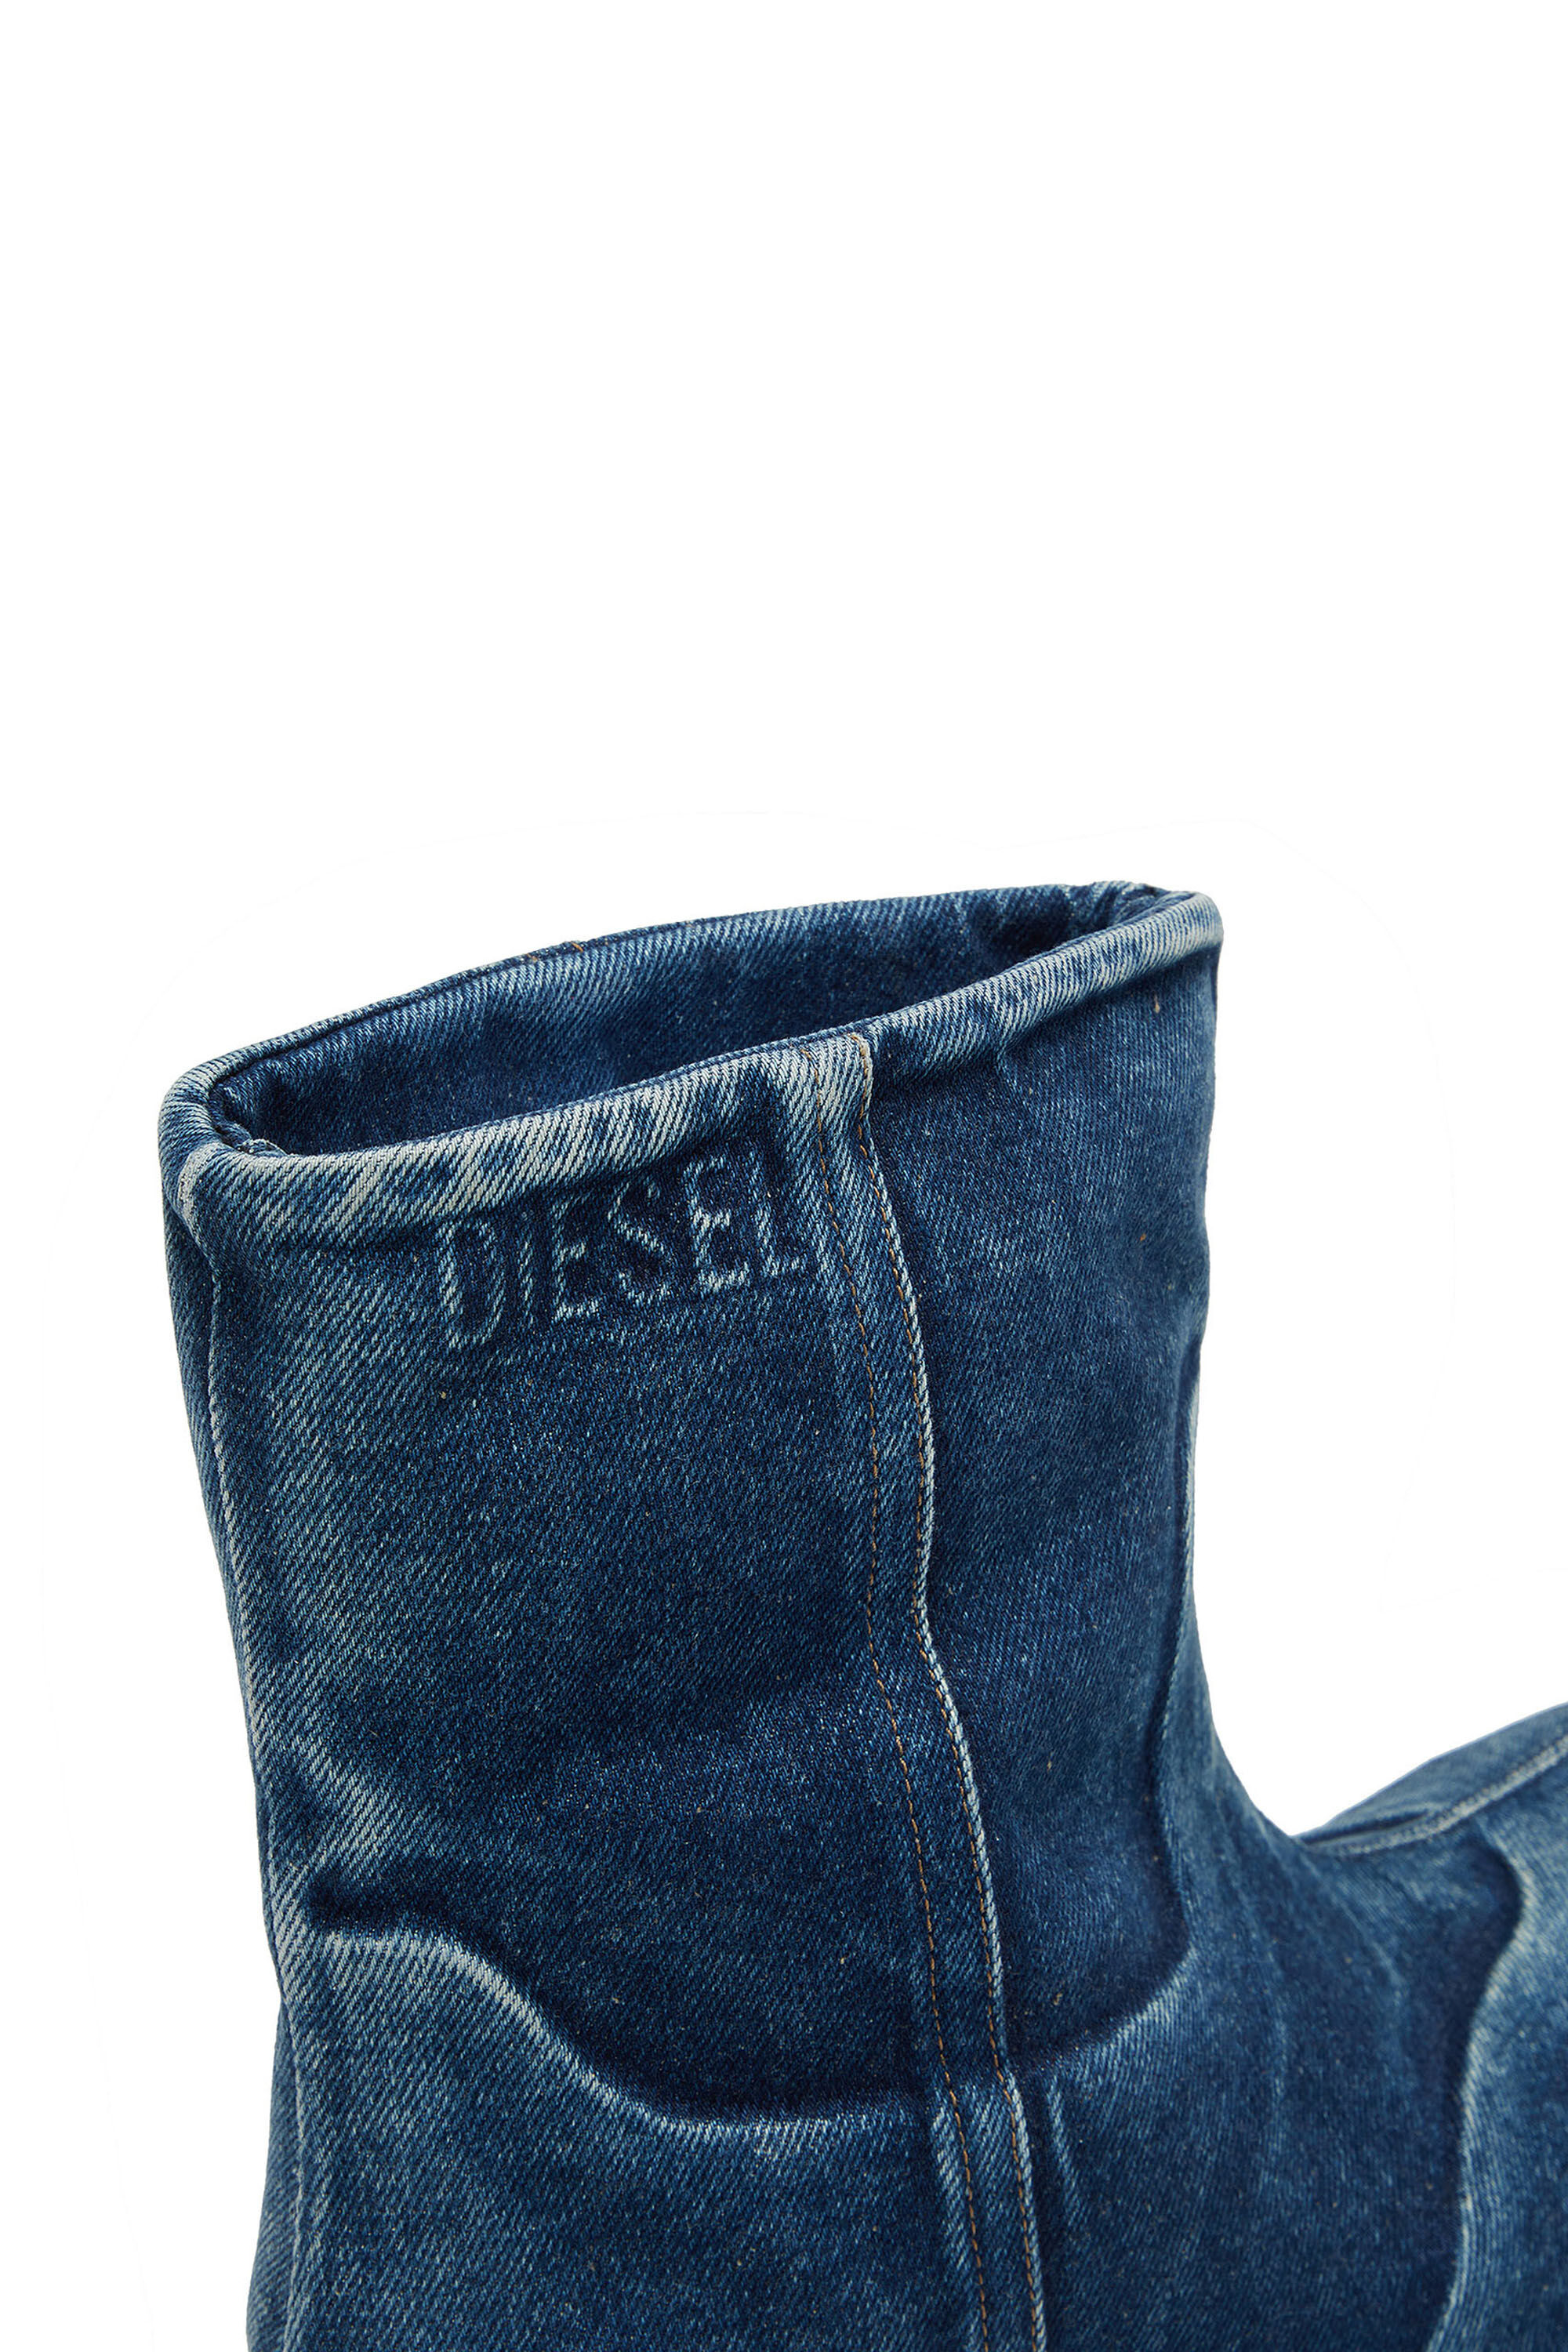 Women's D-Hammer-Chelsea boot in washed denim | Blue | Diesel